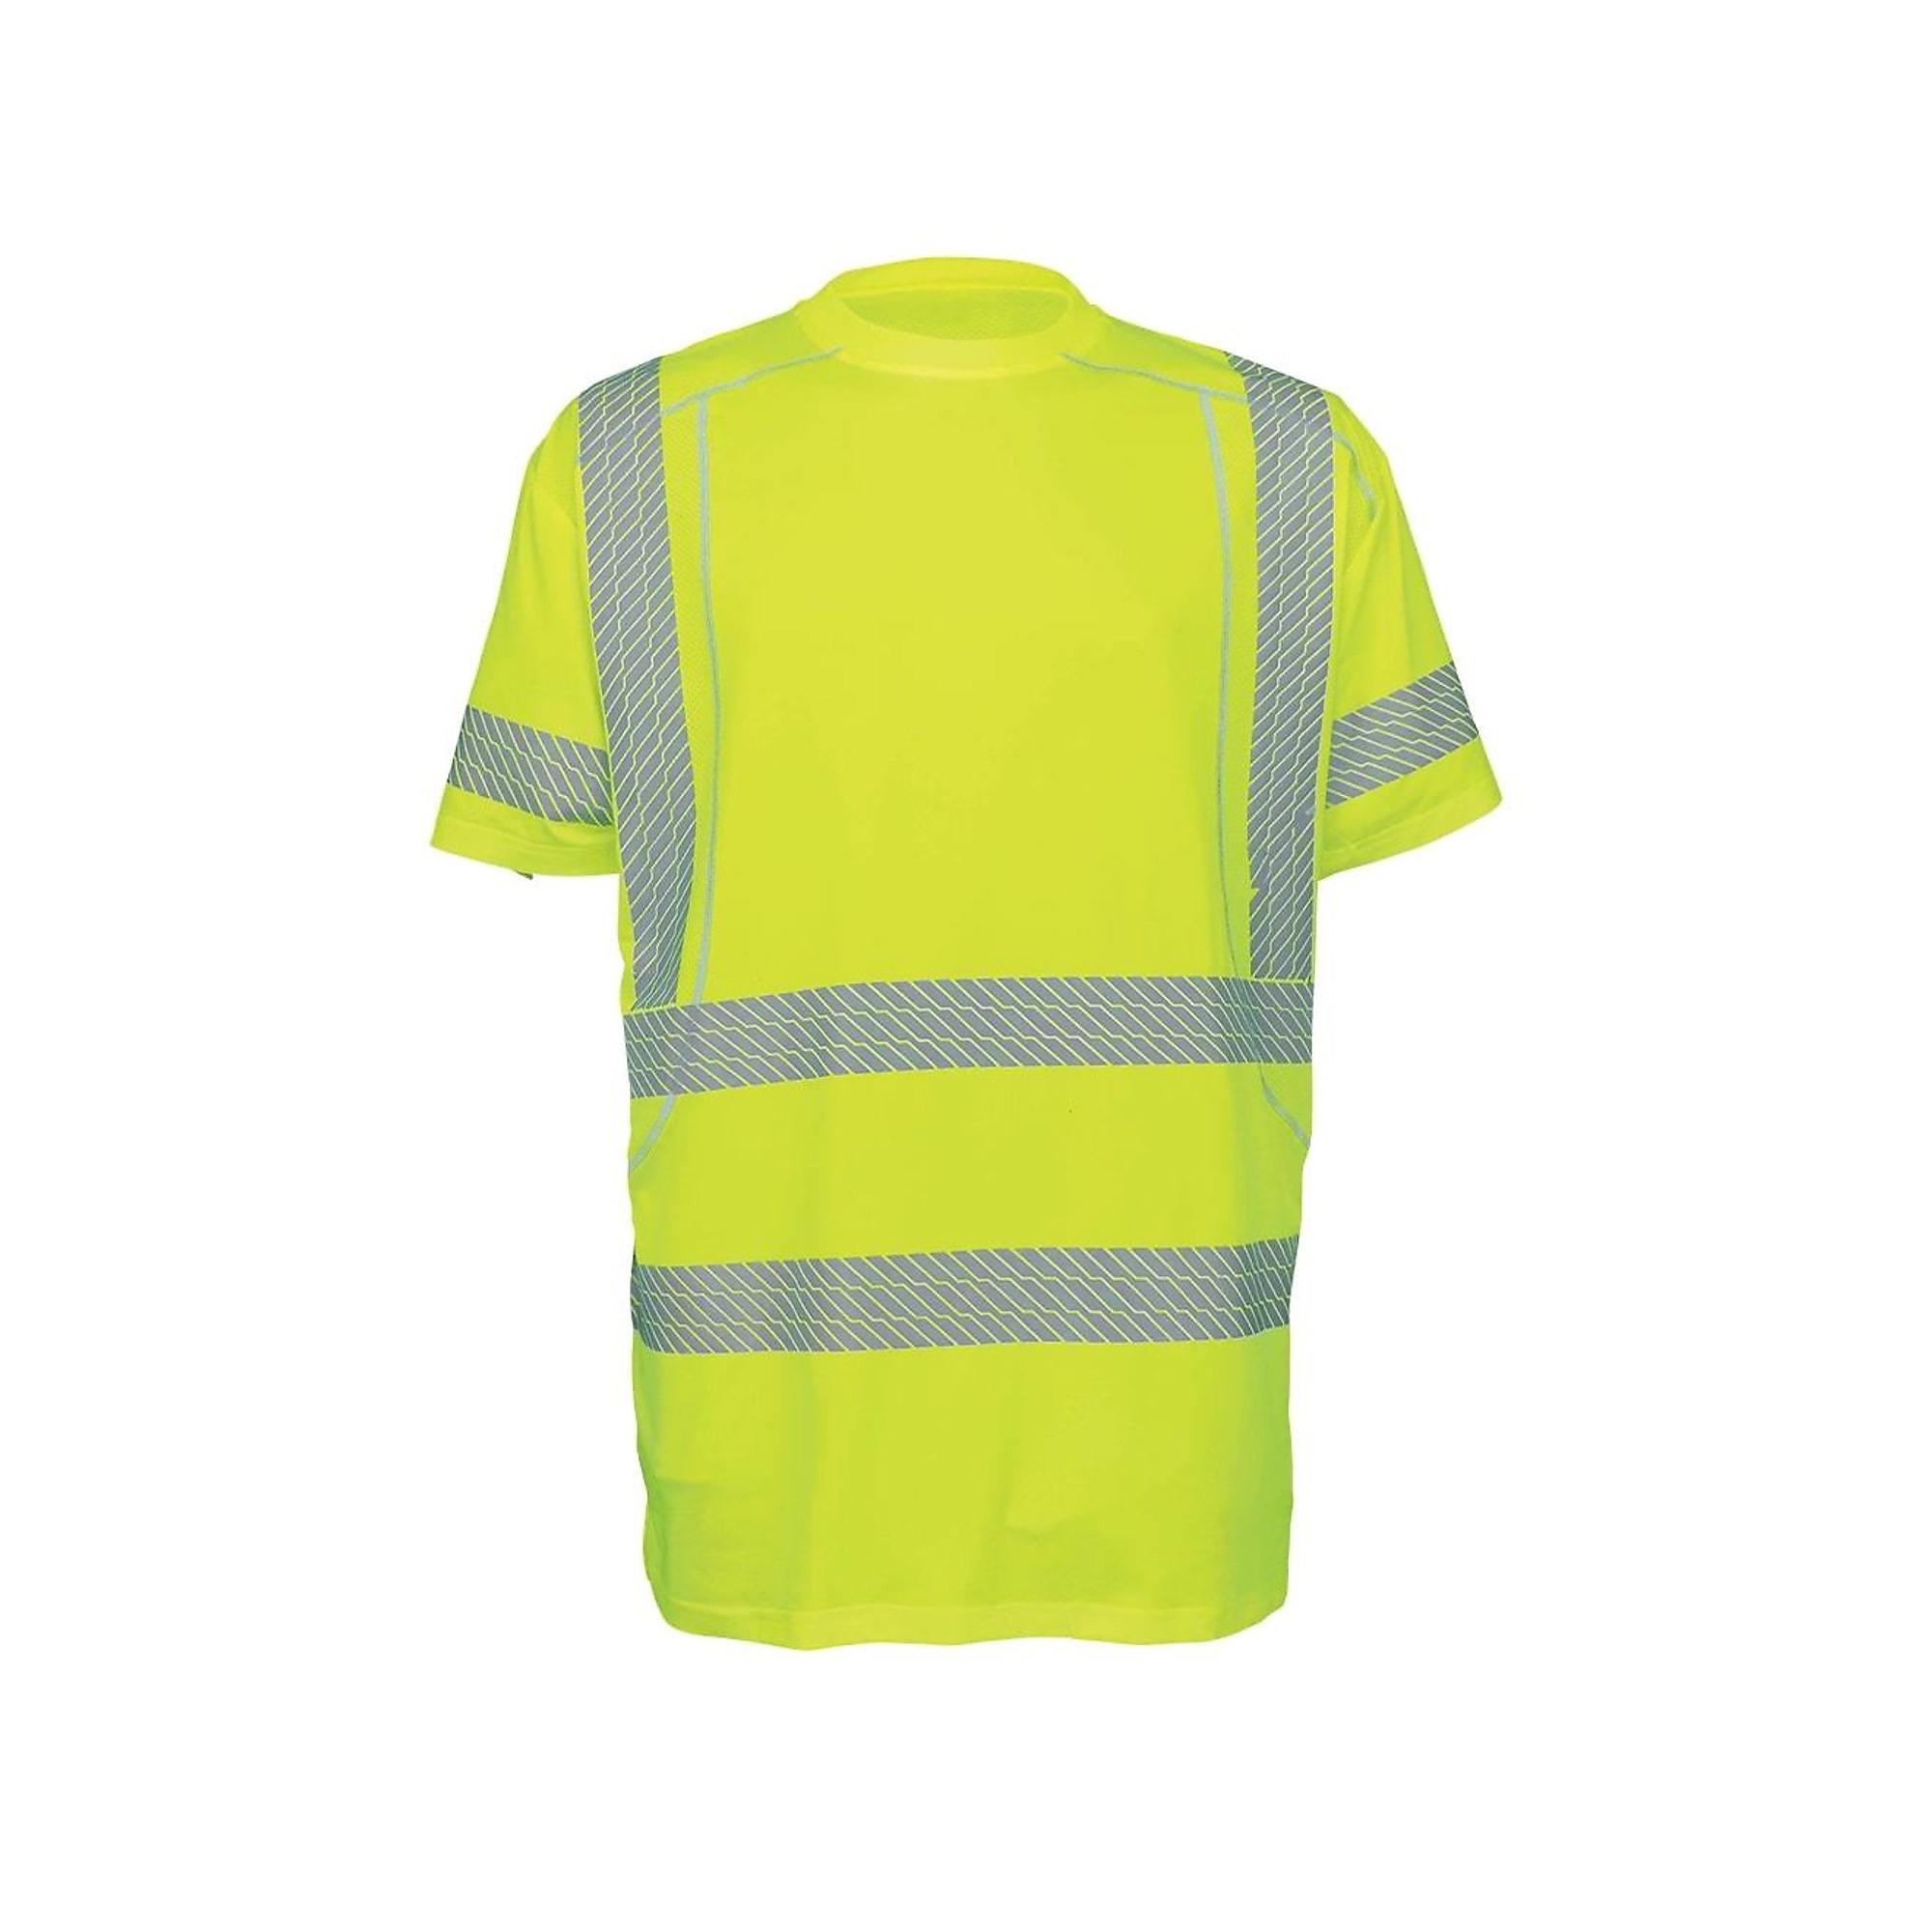 FrogWear, HV Yellow/Green, Class 3 Self-Wicking, Athletic Shirt, Size M, Model GLO-205-M